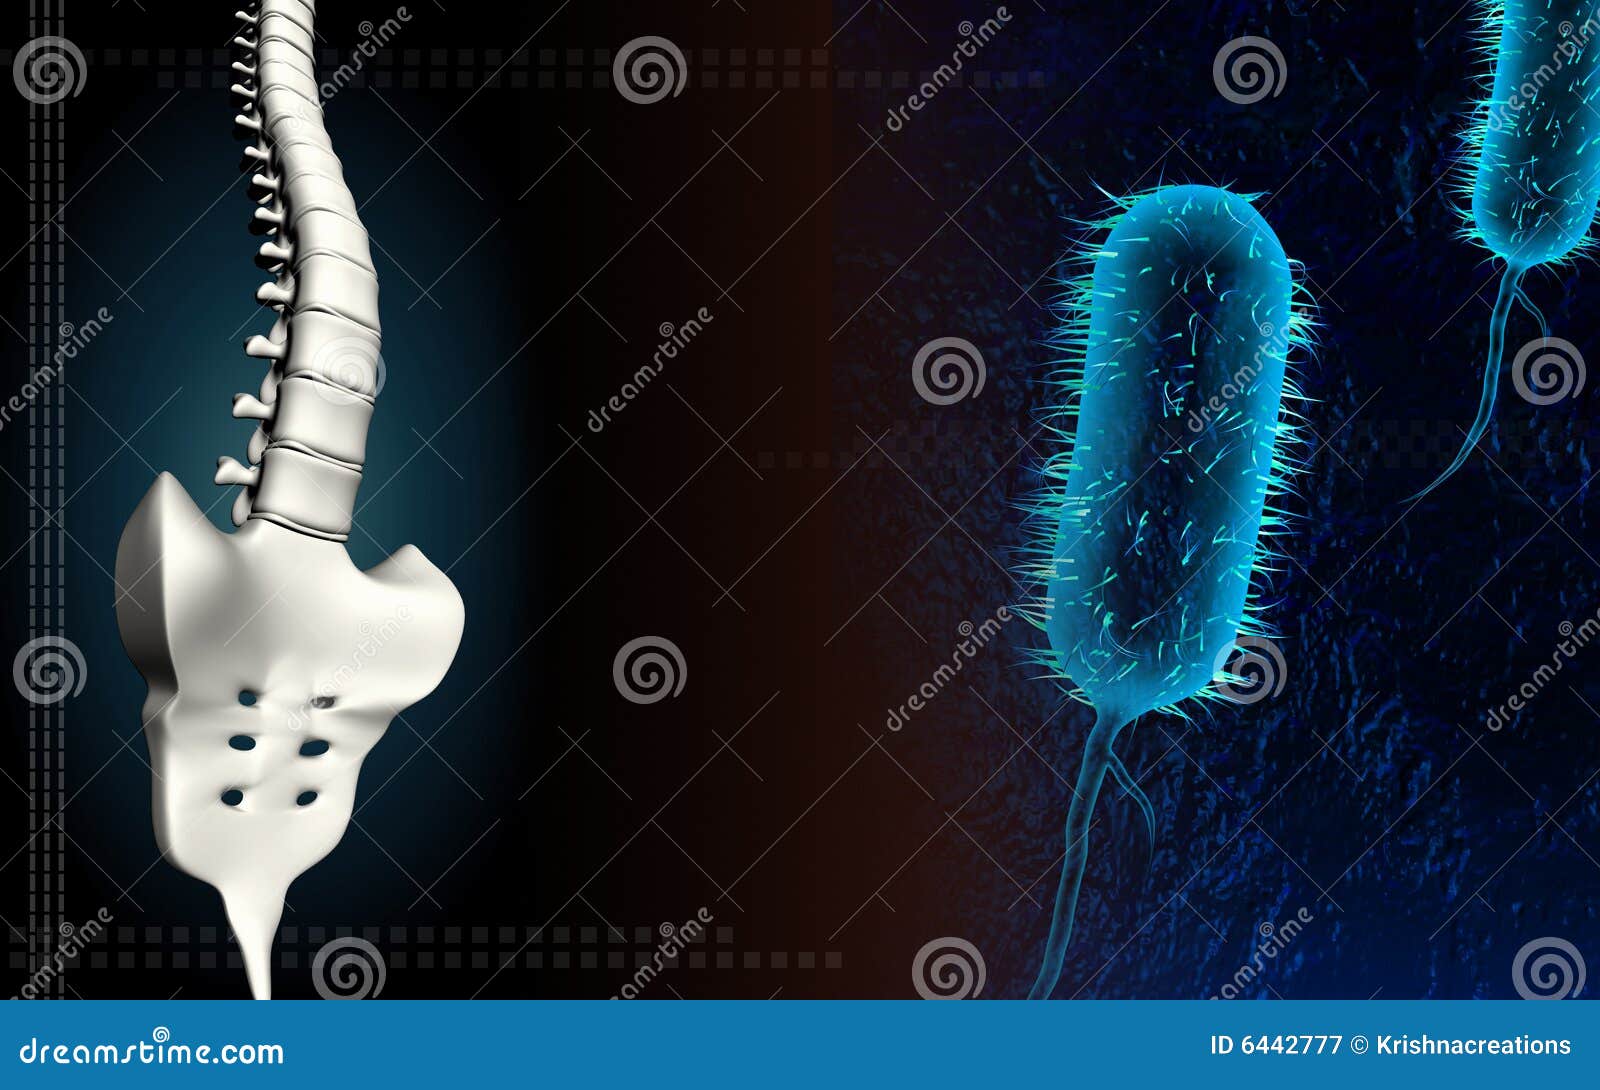 bacillus bacteria in blue and backbone